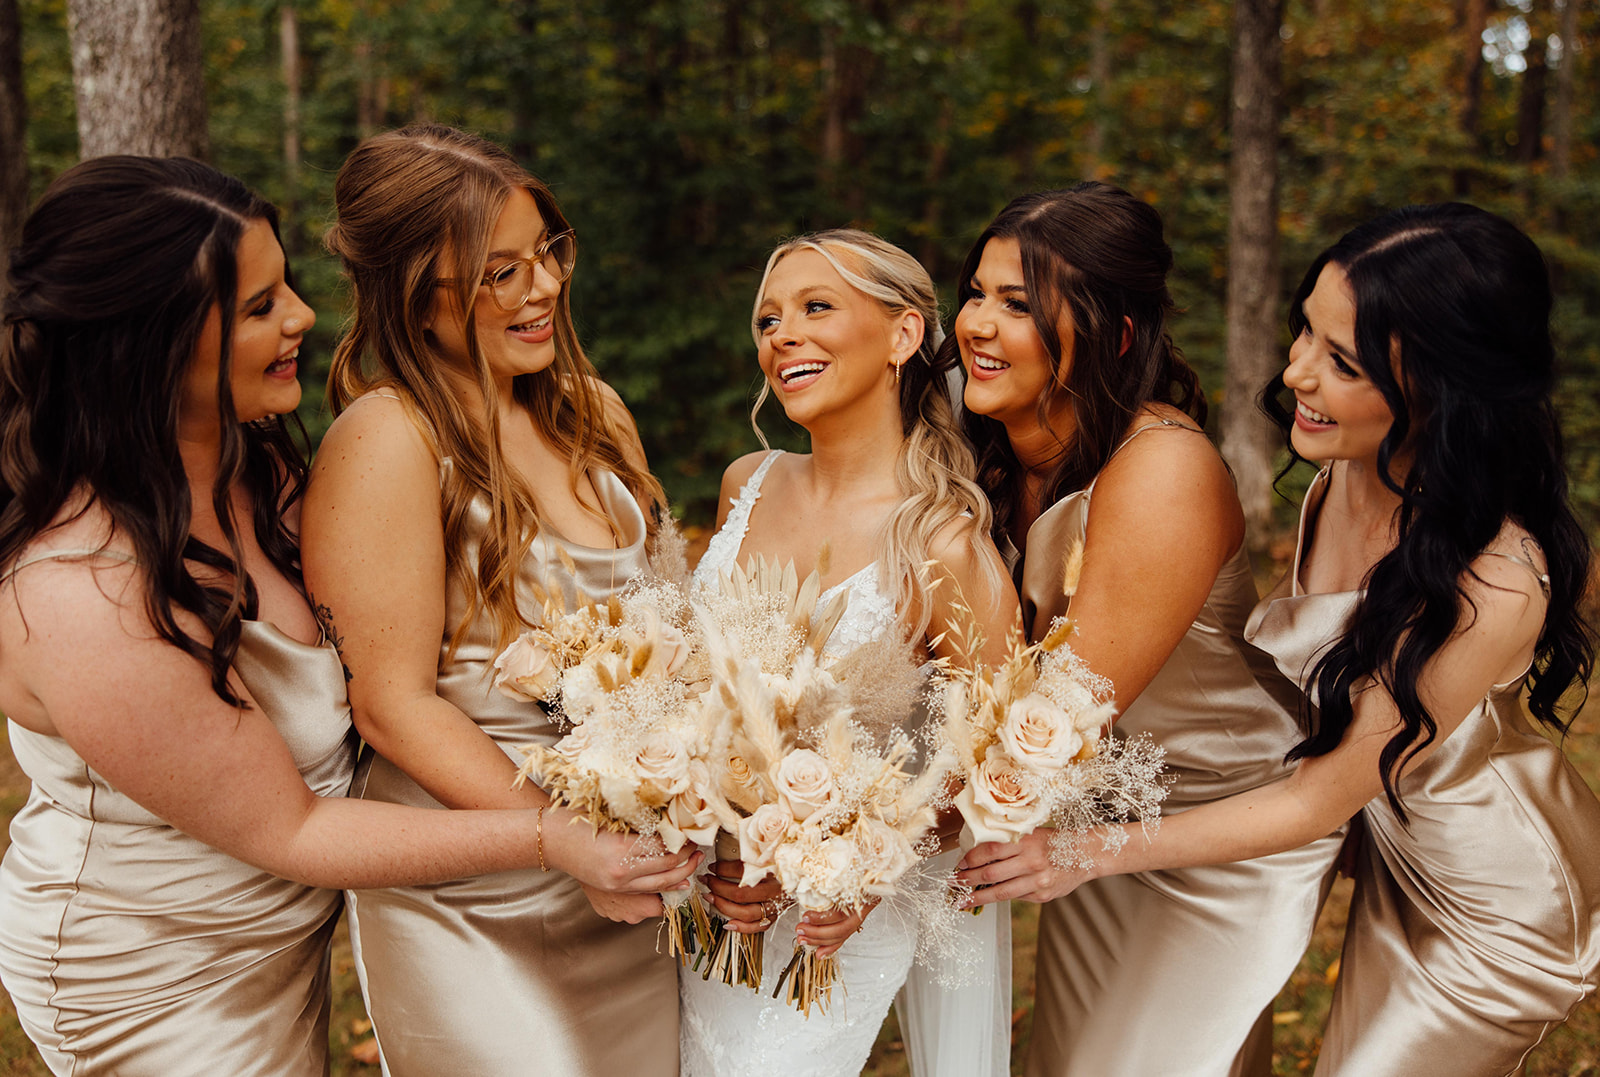 Satin gold bridemaid dresses, white wedding bouquet